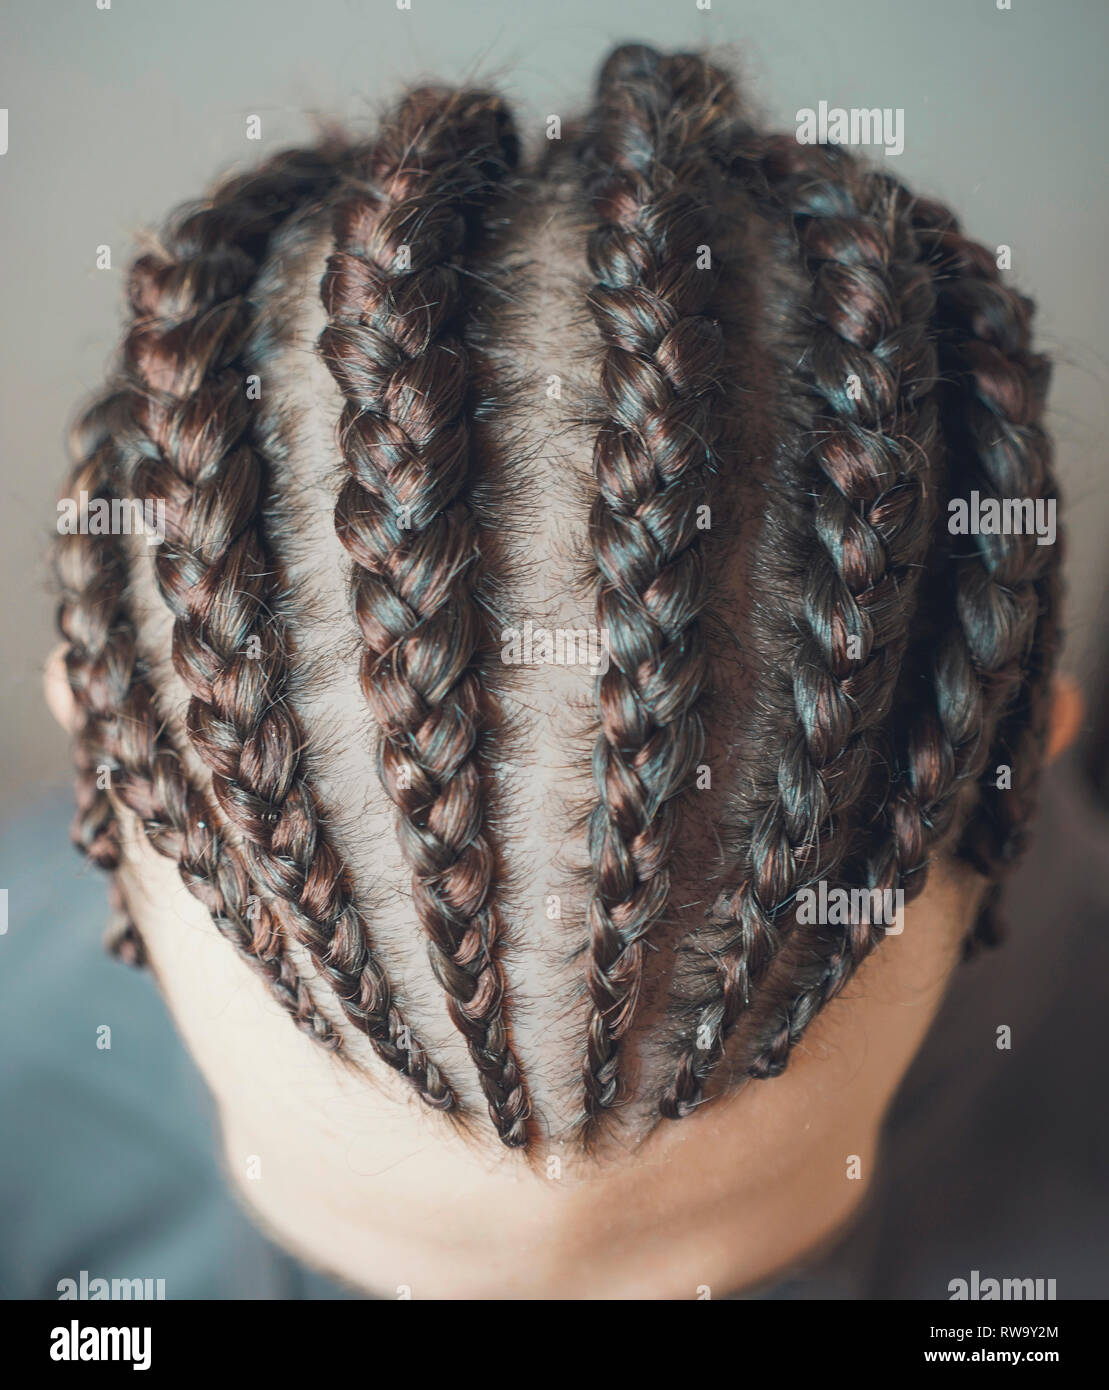 men cornrows braids for men, hair braided, close-up Stock Photo